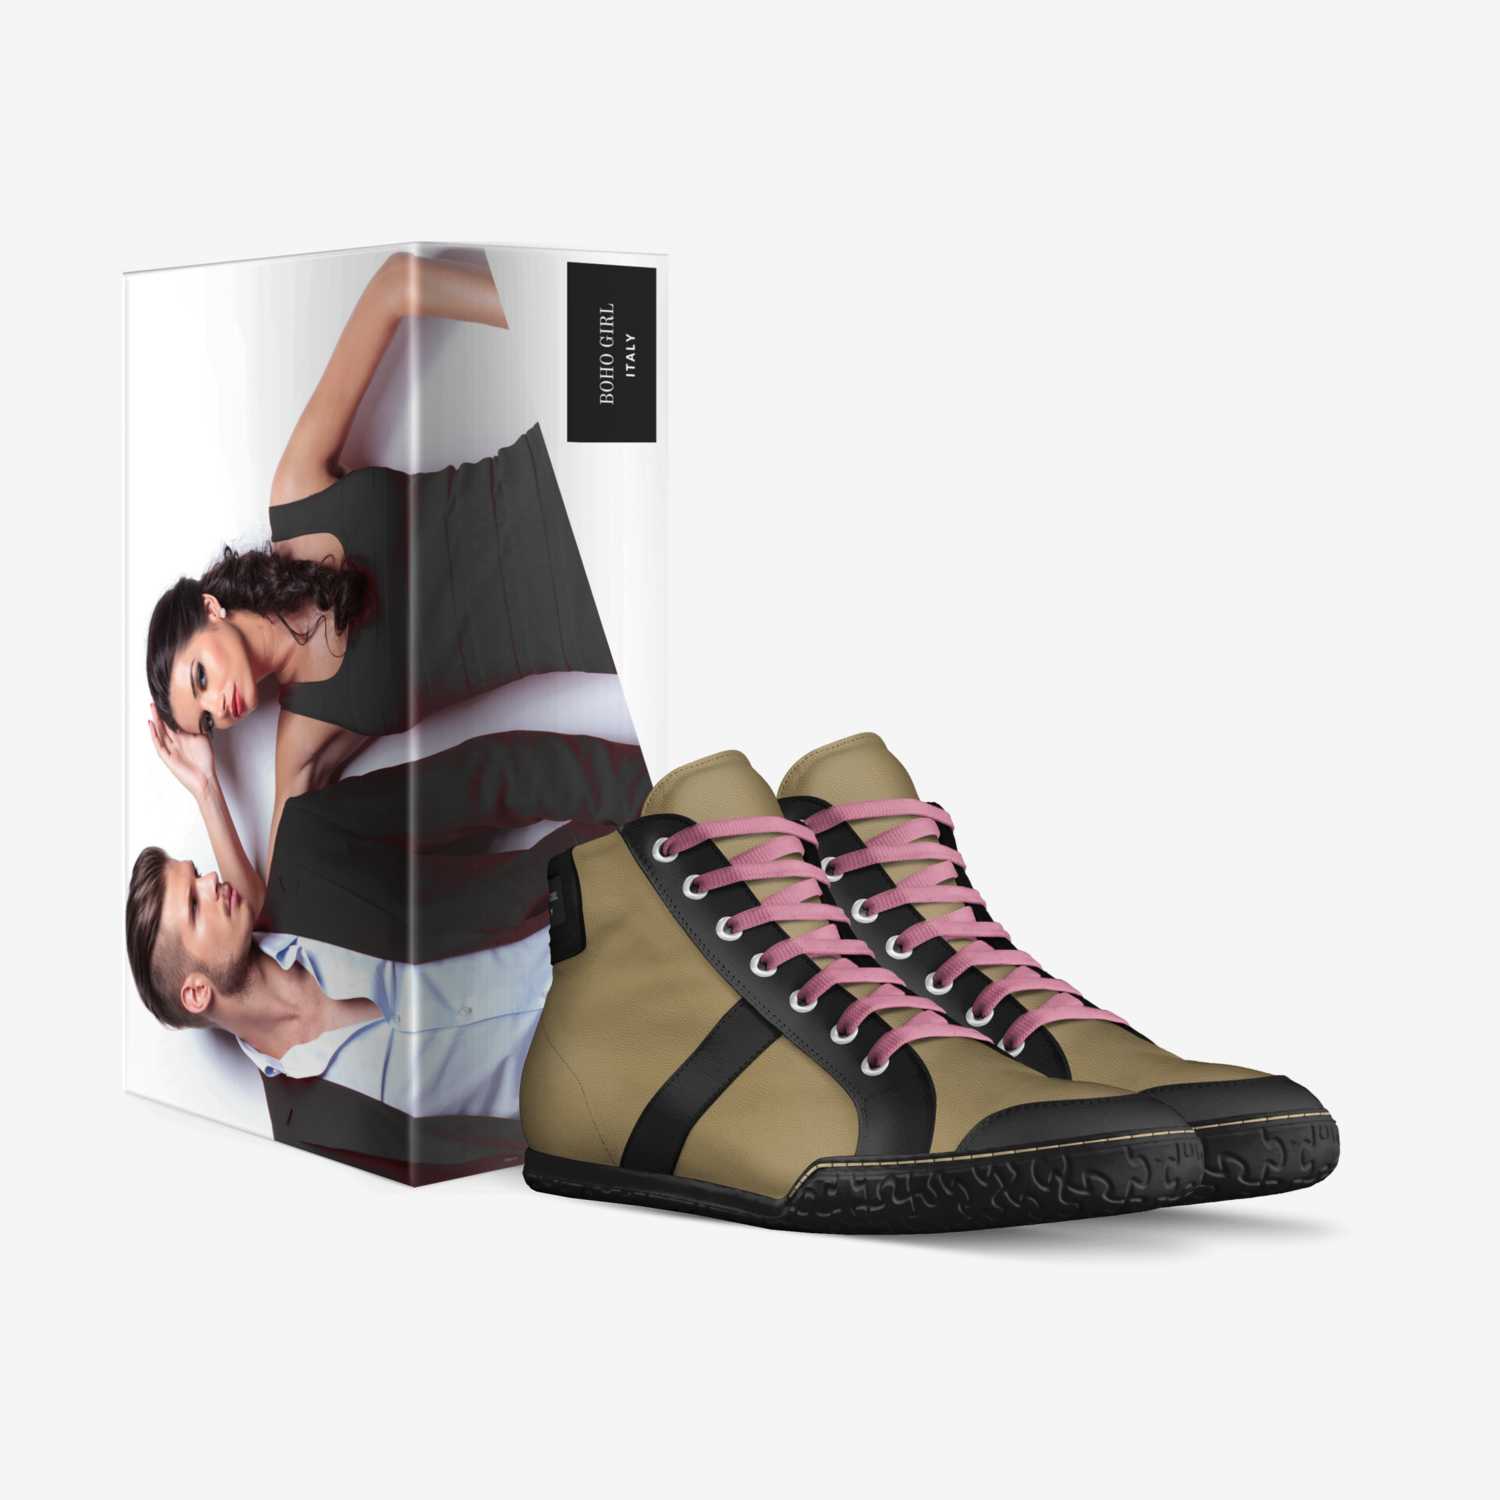 BOHO GIRL custom made in Italy shoes by Marijke Verkerk | Box view